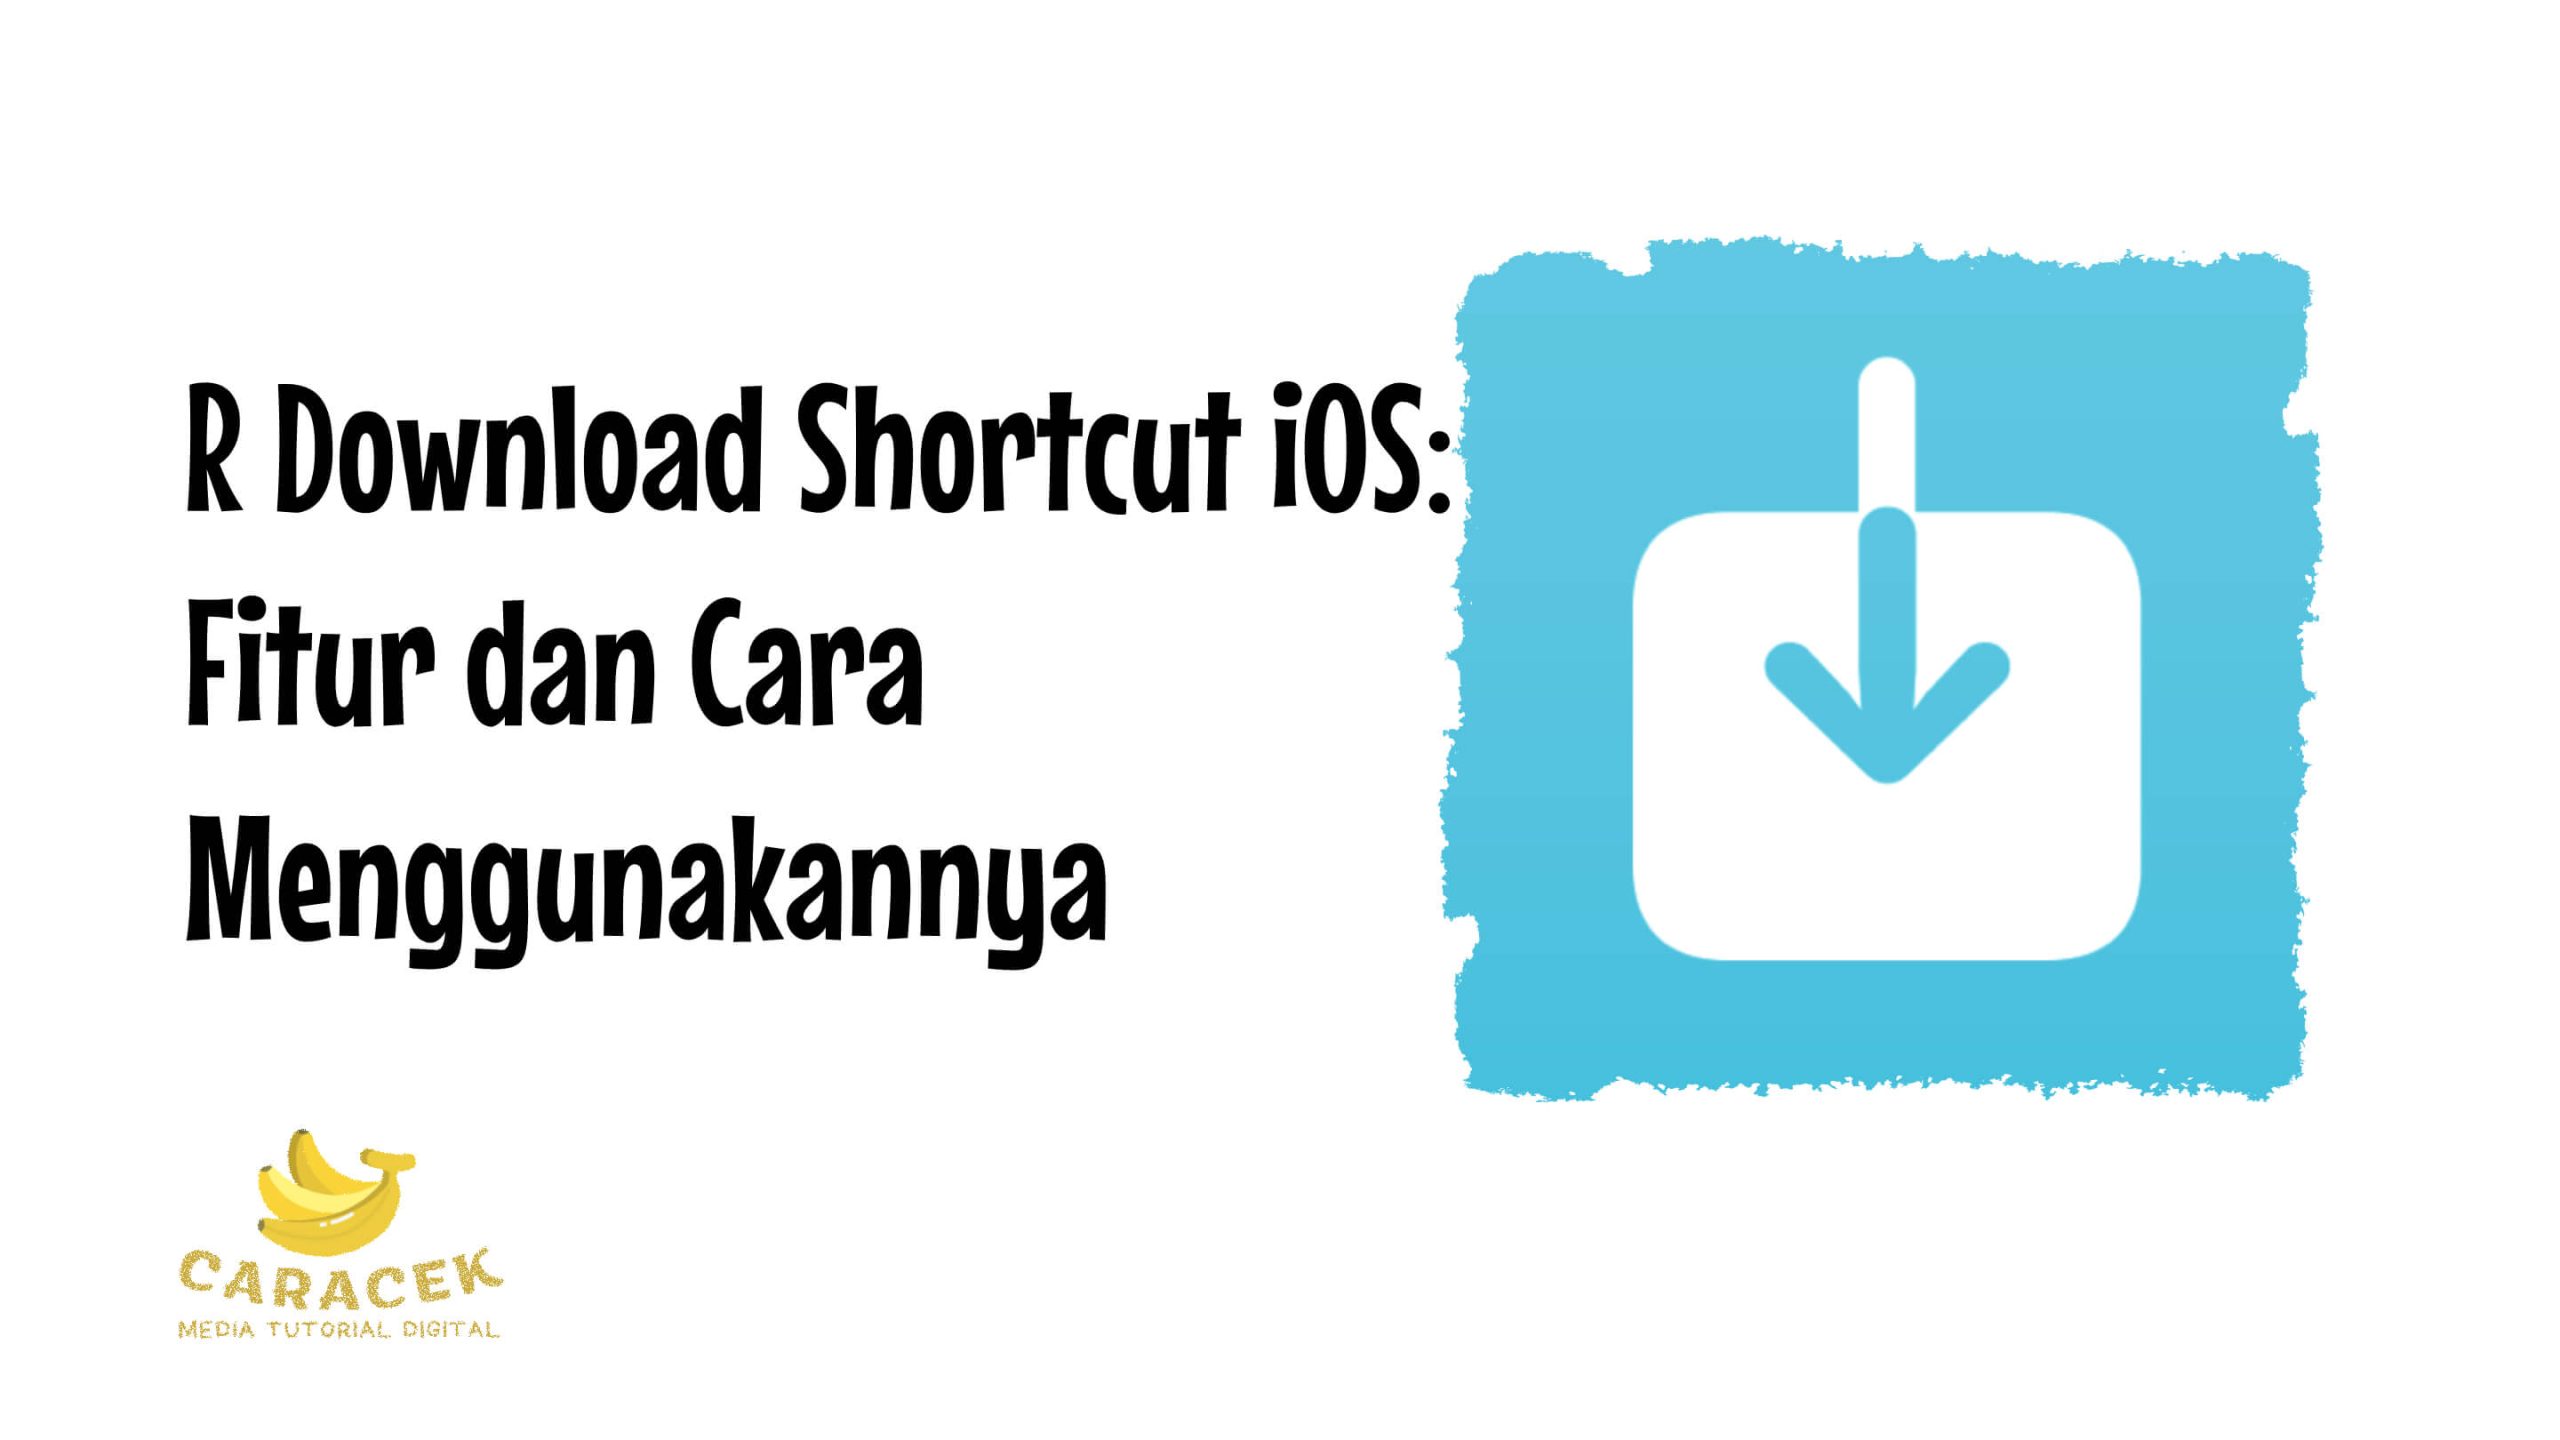 R Download Shortcut iOS